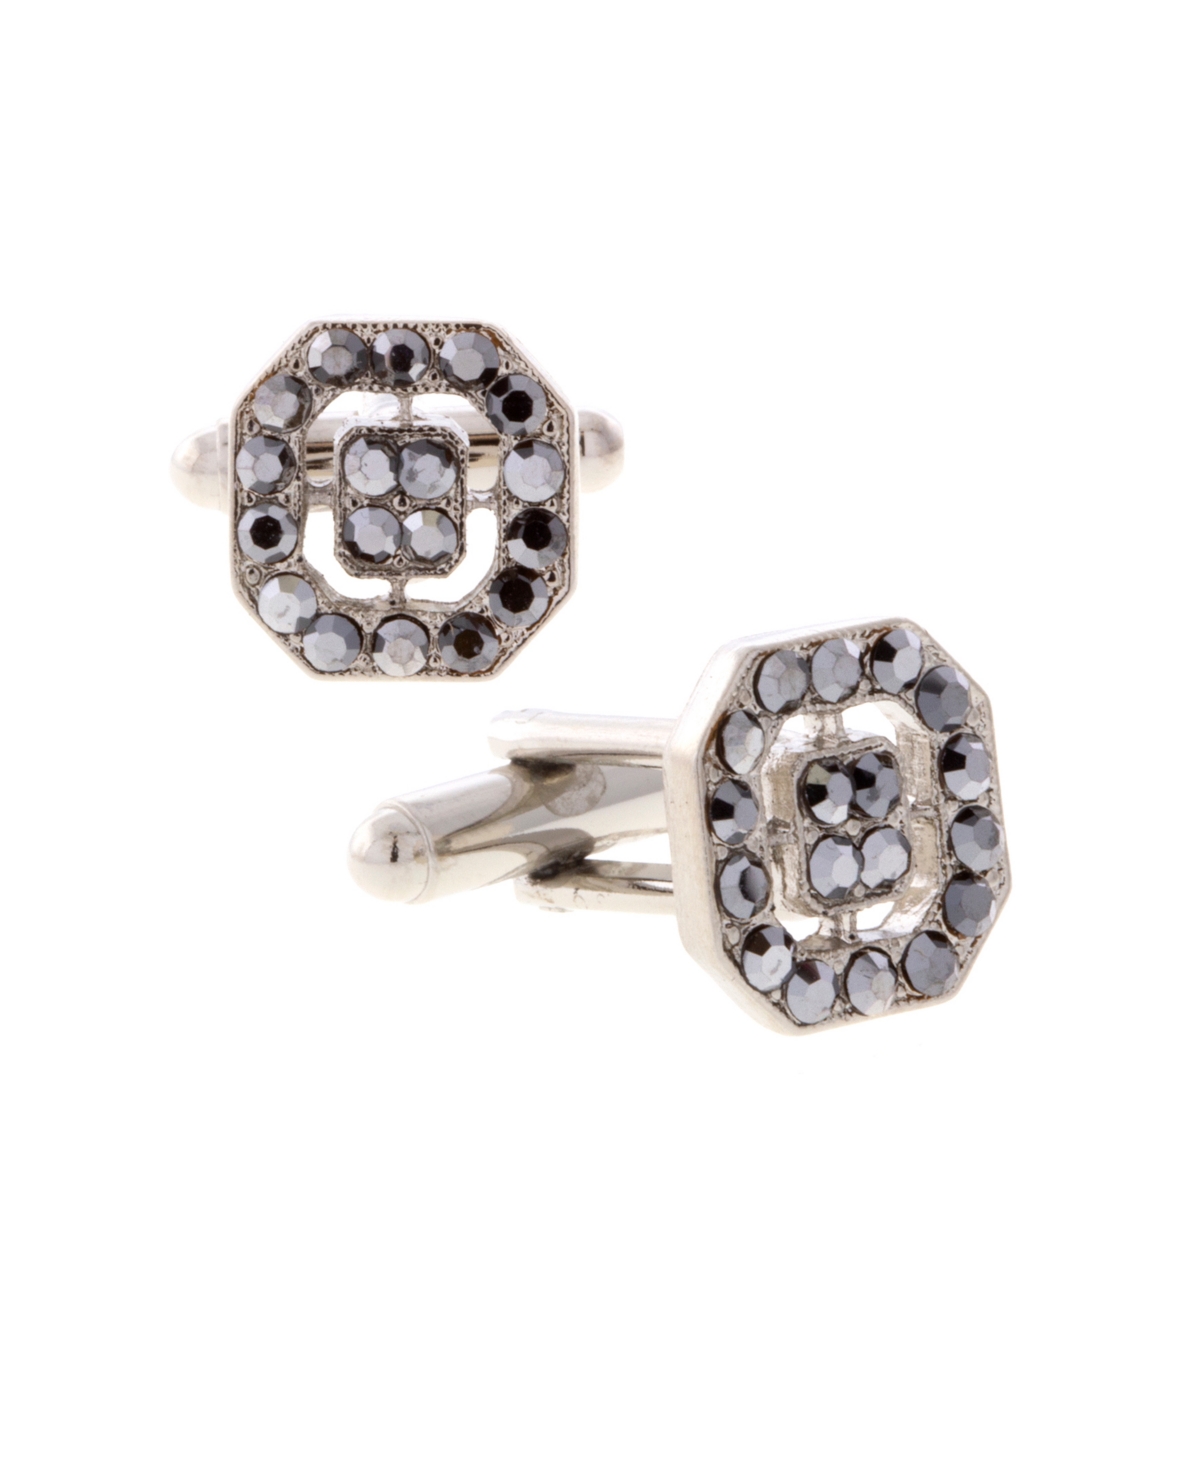 Jewelry Silver-Tone Crystal Octagon Cufflinks - Charcoal